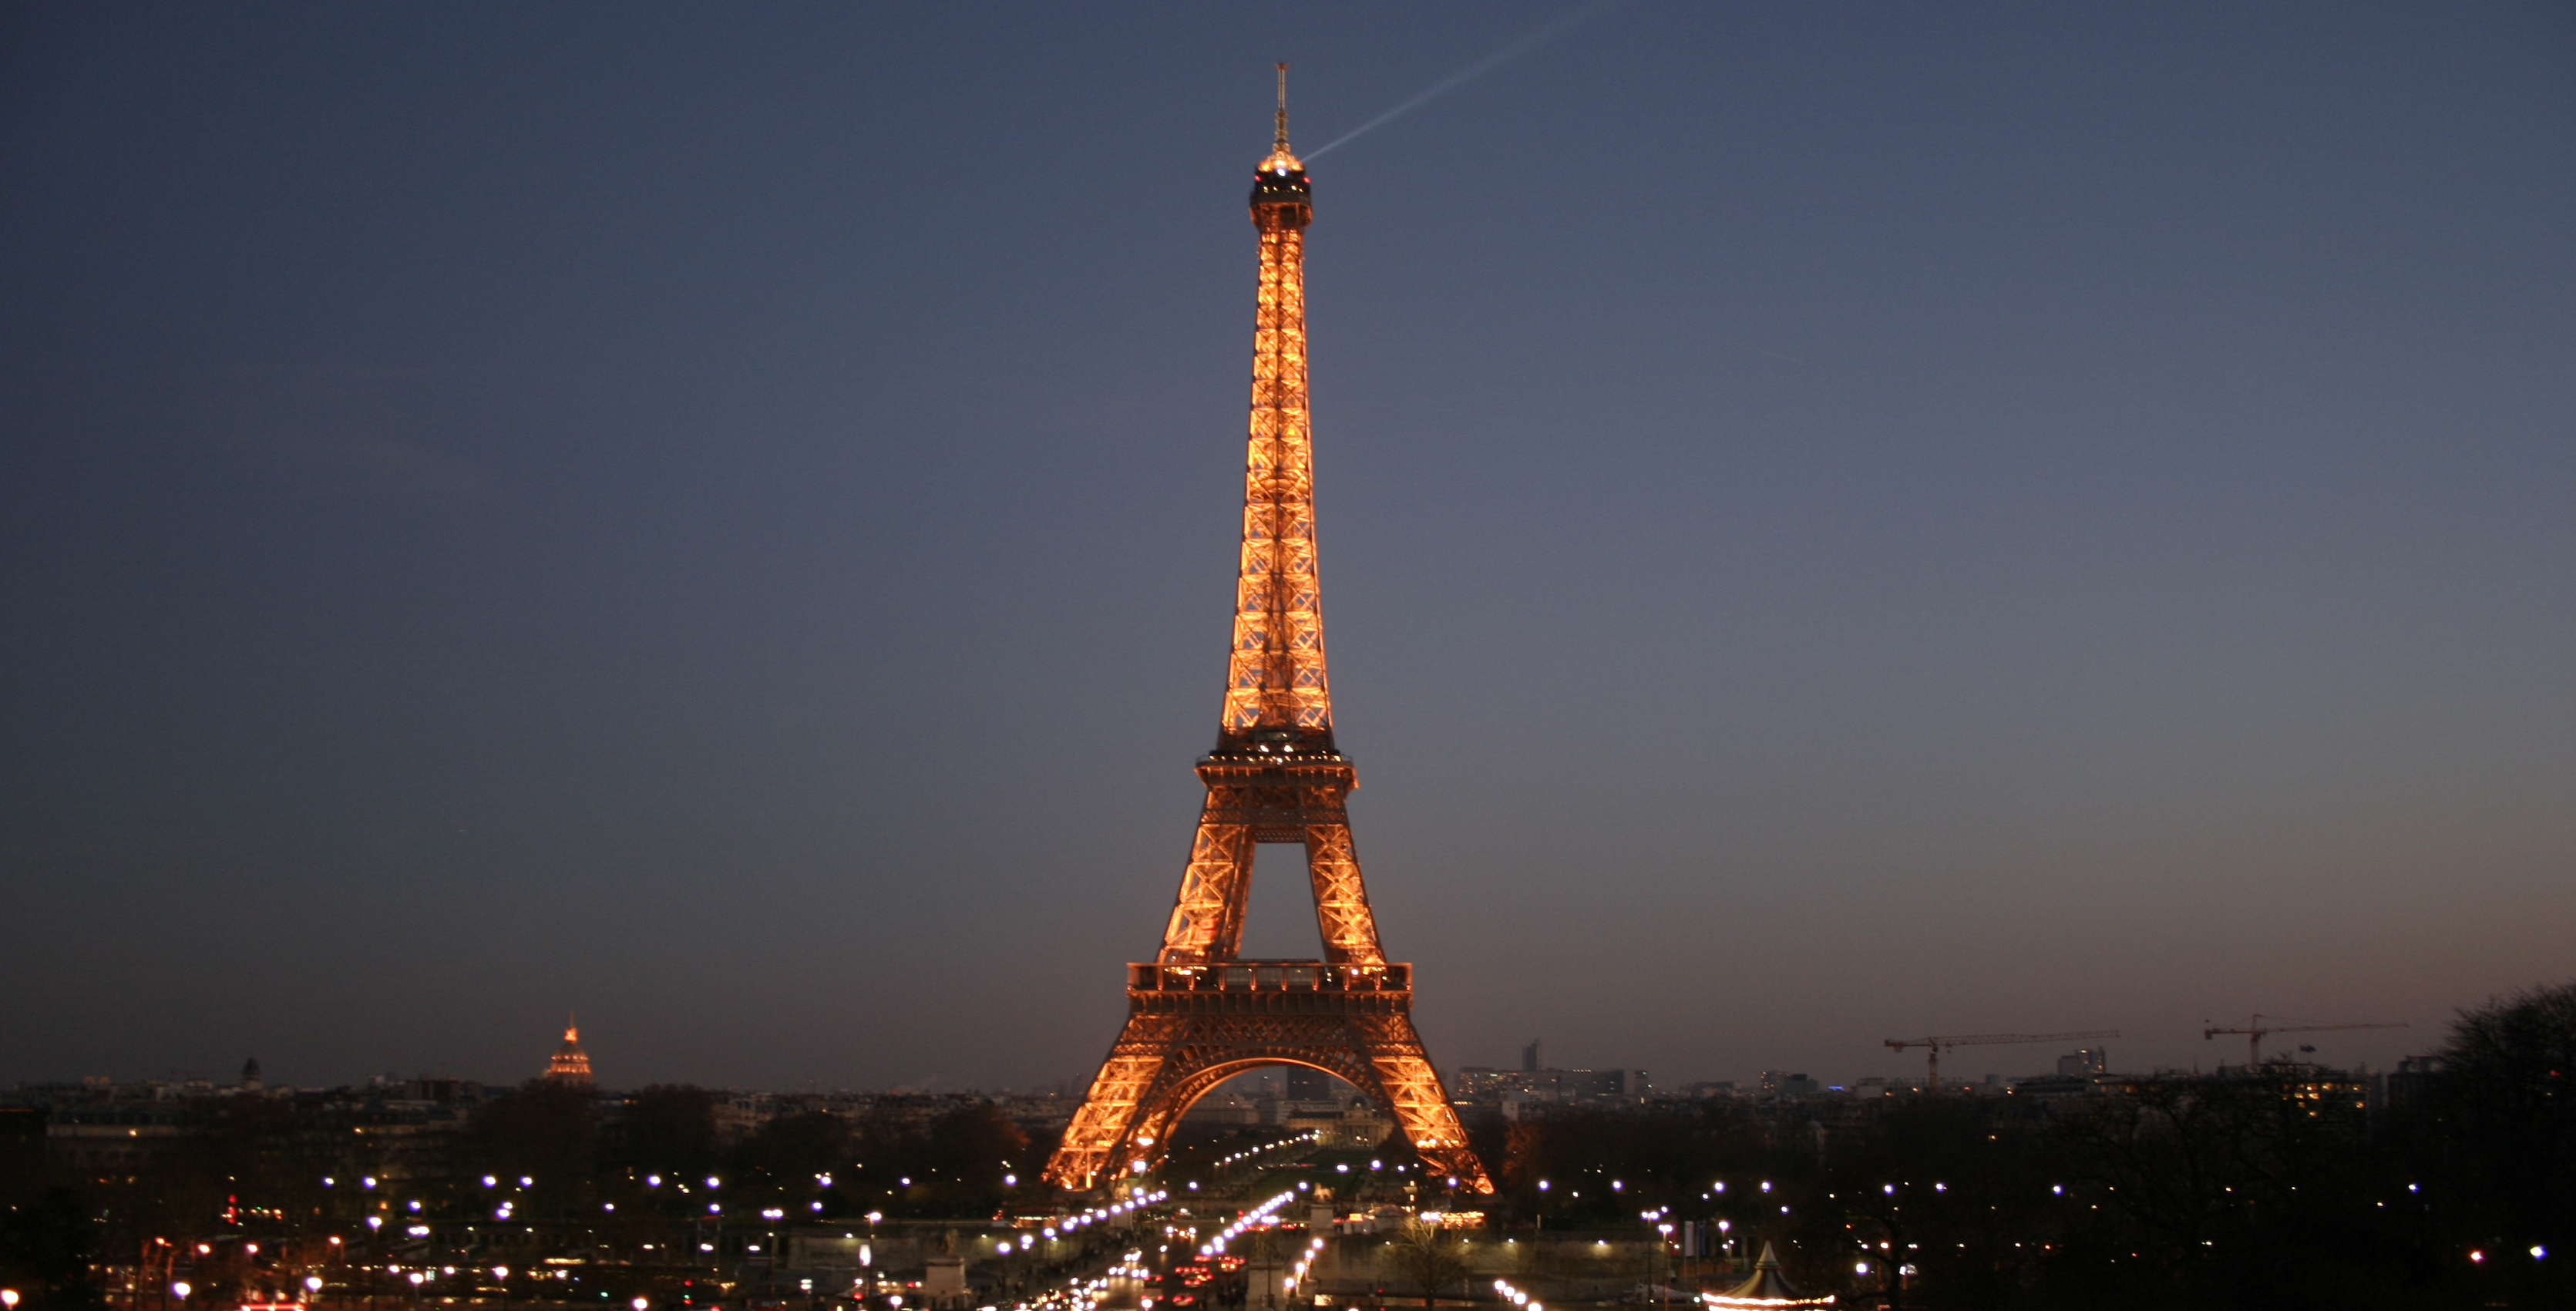 Eifel tower lighted at night